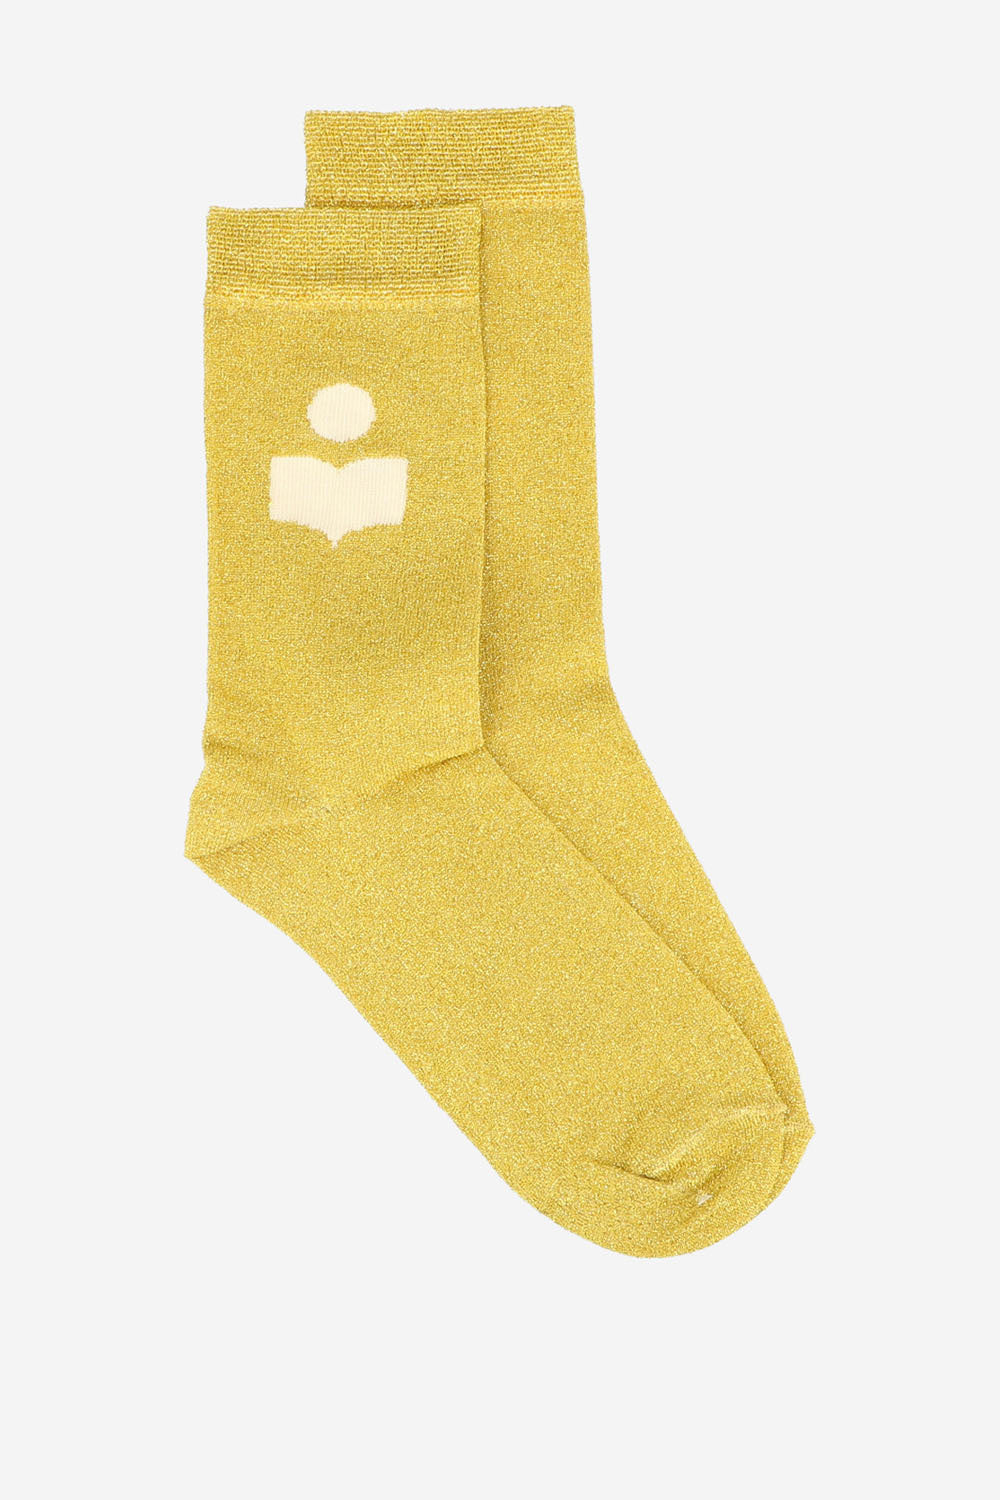 Slazia socks, yellow